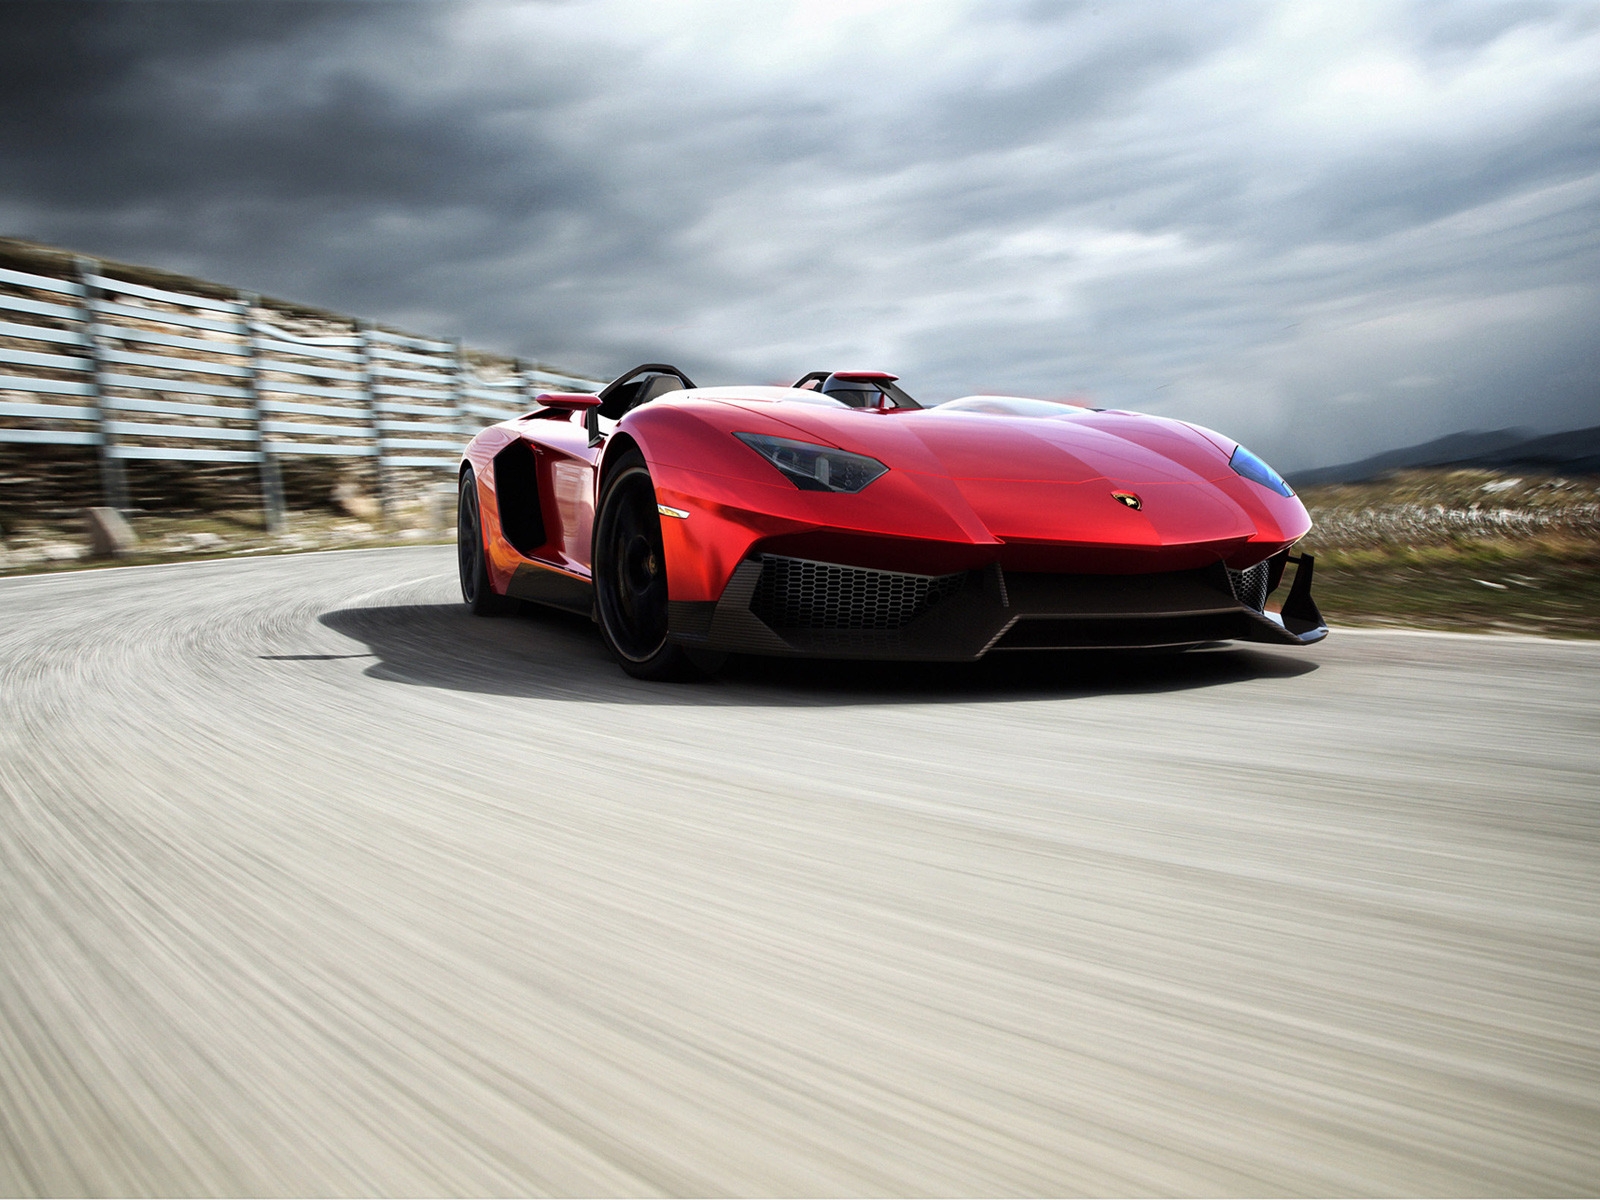 2012 Lamborghini Aventador J Speed for 1600 x 1200 resolution